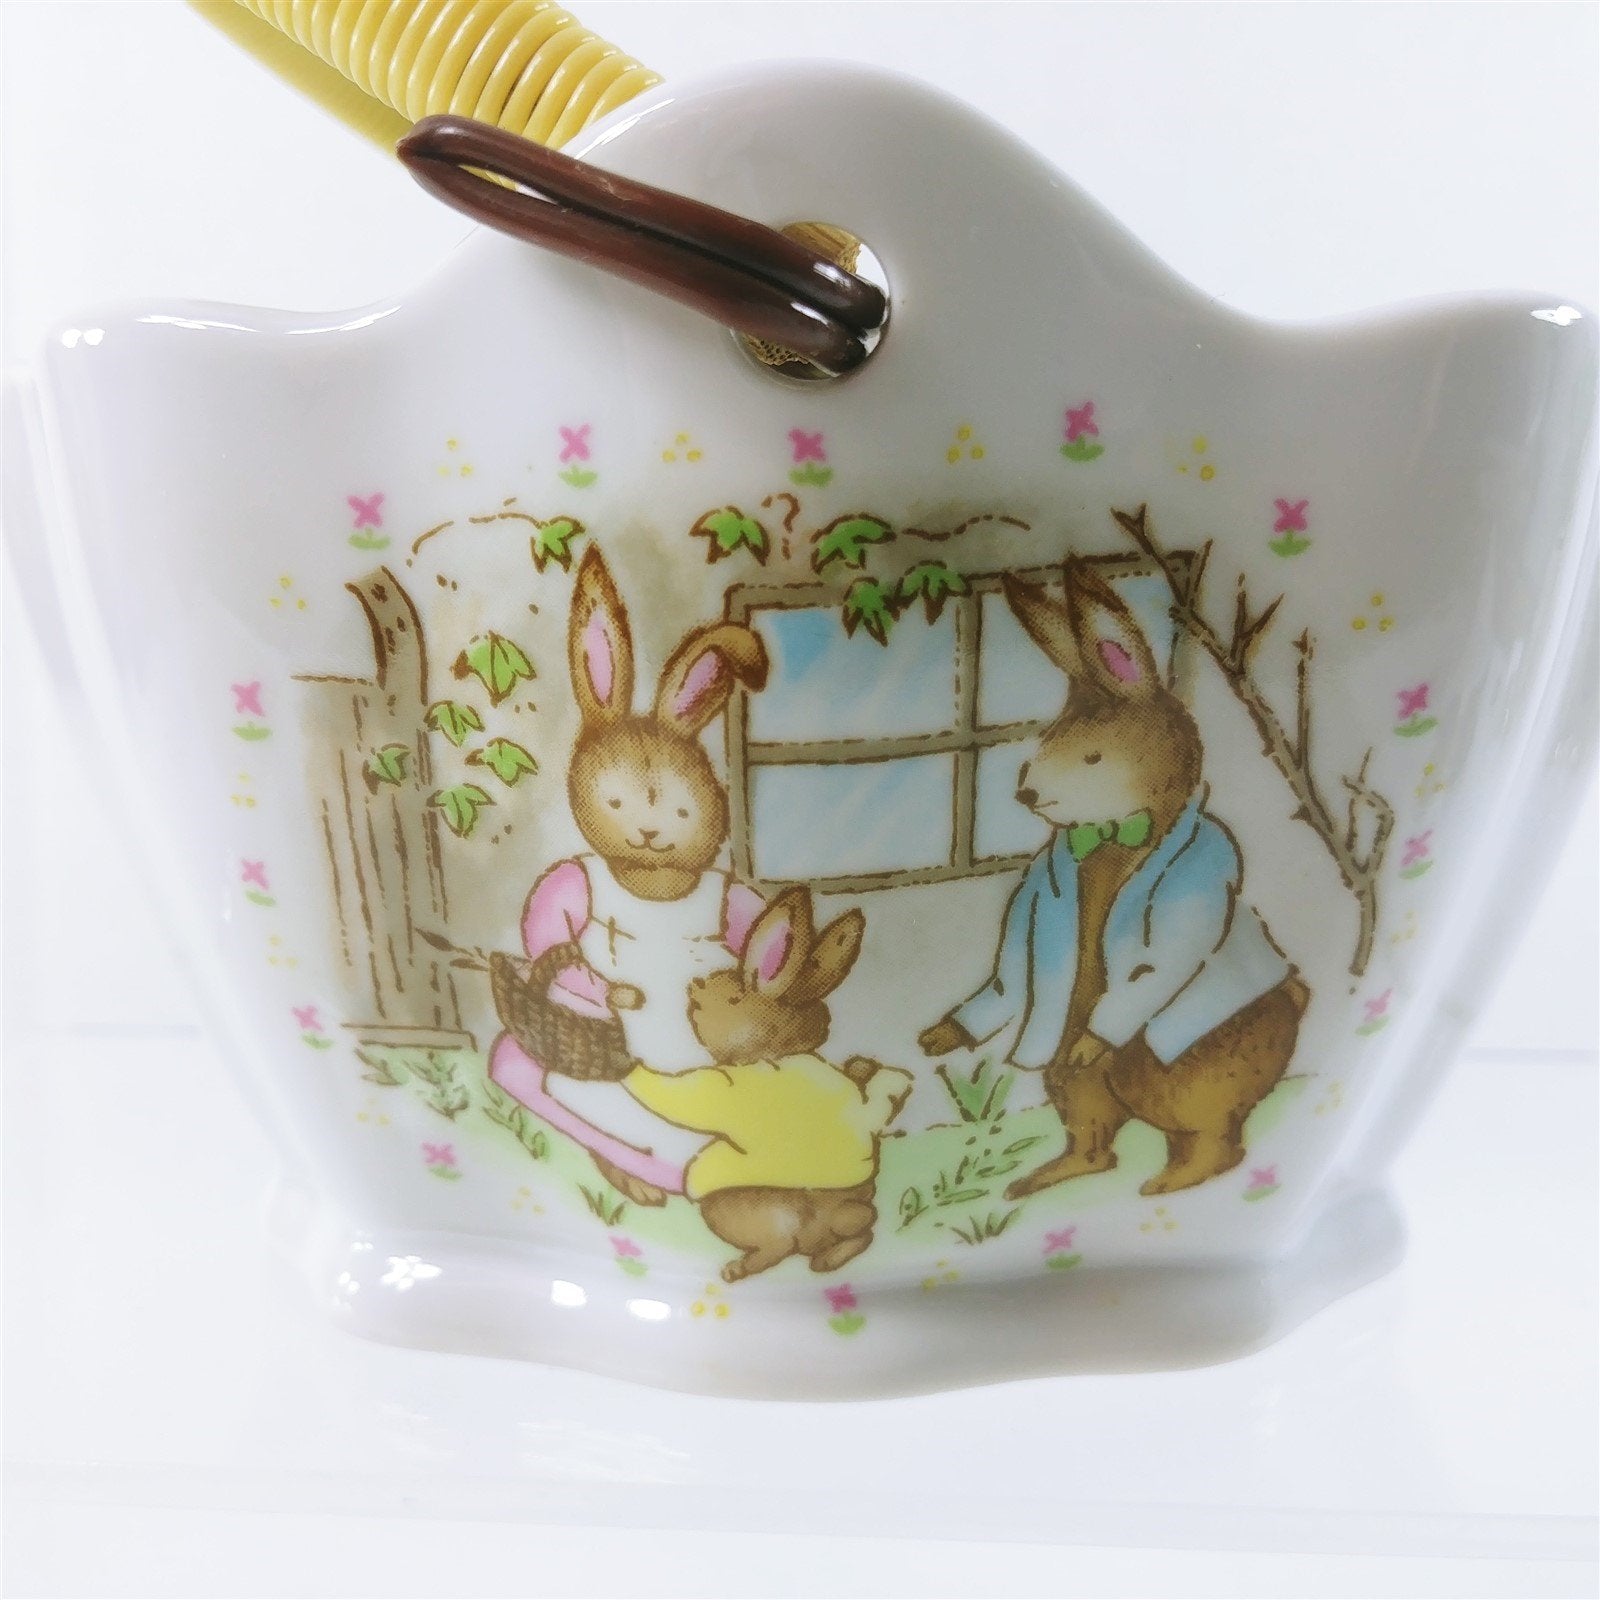 Candy Dish Basket Ceramic with Handle Bunny Motif Wicks N Sticks Japan